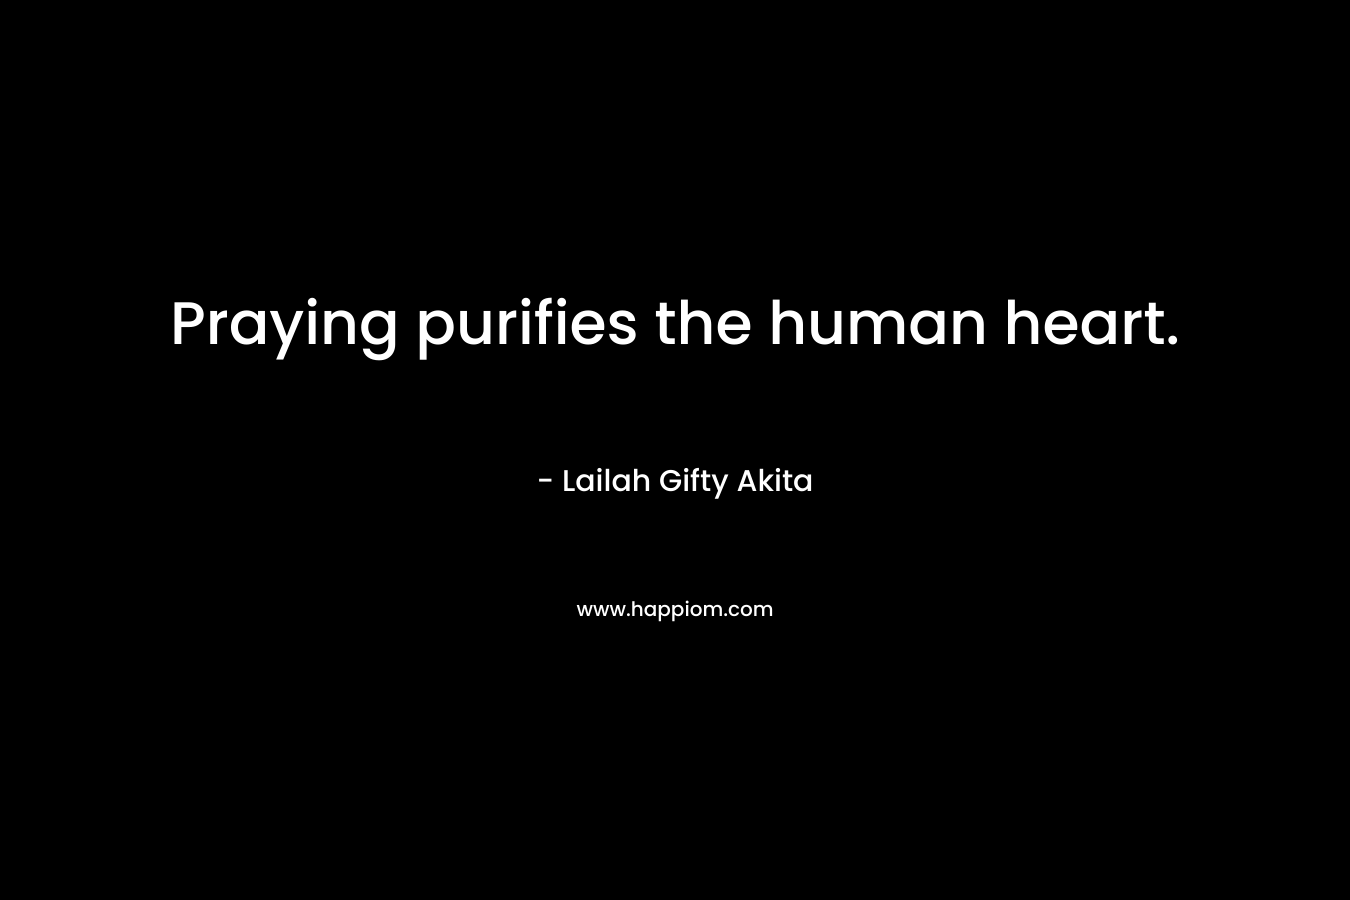 Praying purifies the human heart.